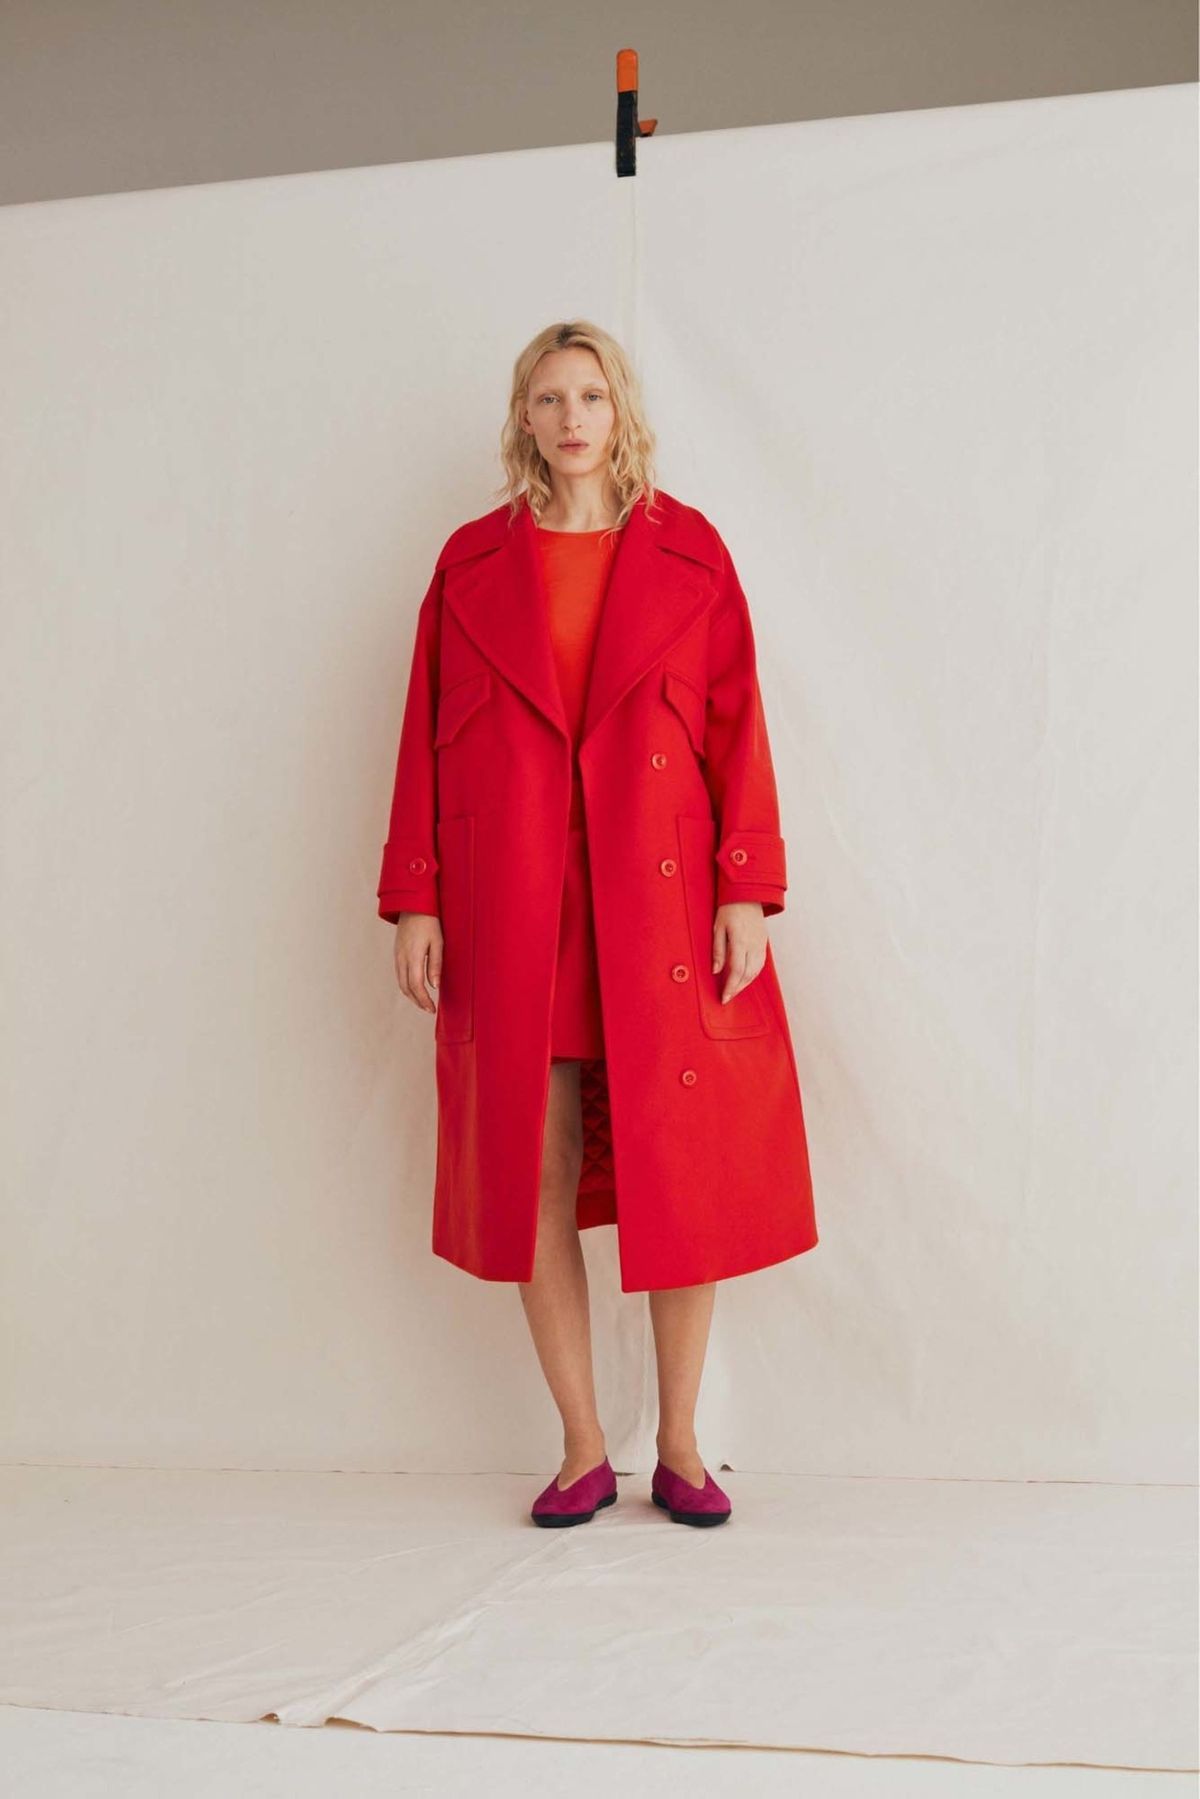 Rodebjer ready-to-wear autumn/winter '17/'18 - Vogue Australia